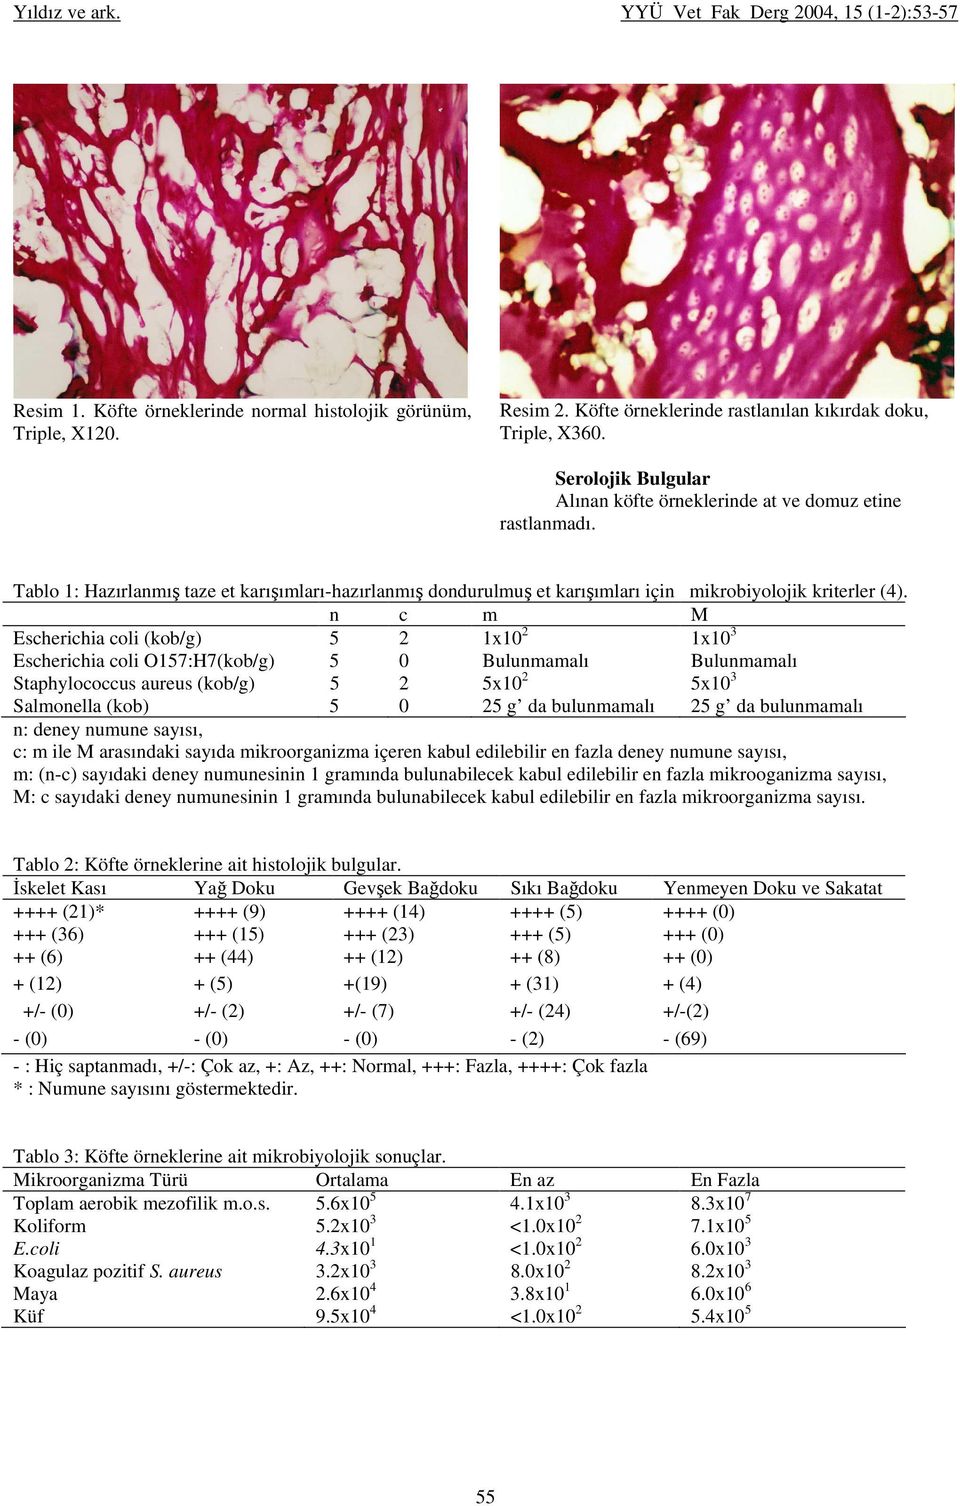 n c m M Escherichia coli (kob/g) 5 2 1x10 2 1x10 3 Escherichia coli O157:H7(kob/g) 5 0 Bulunmamalı Bulunmamalı Staphylococcus aureus (kob/g) 5 2 5x10 2 5x10 3 Salmonella (kob) 5 0 25 g da bulunmamalı